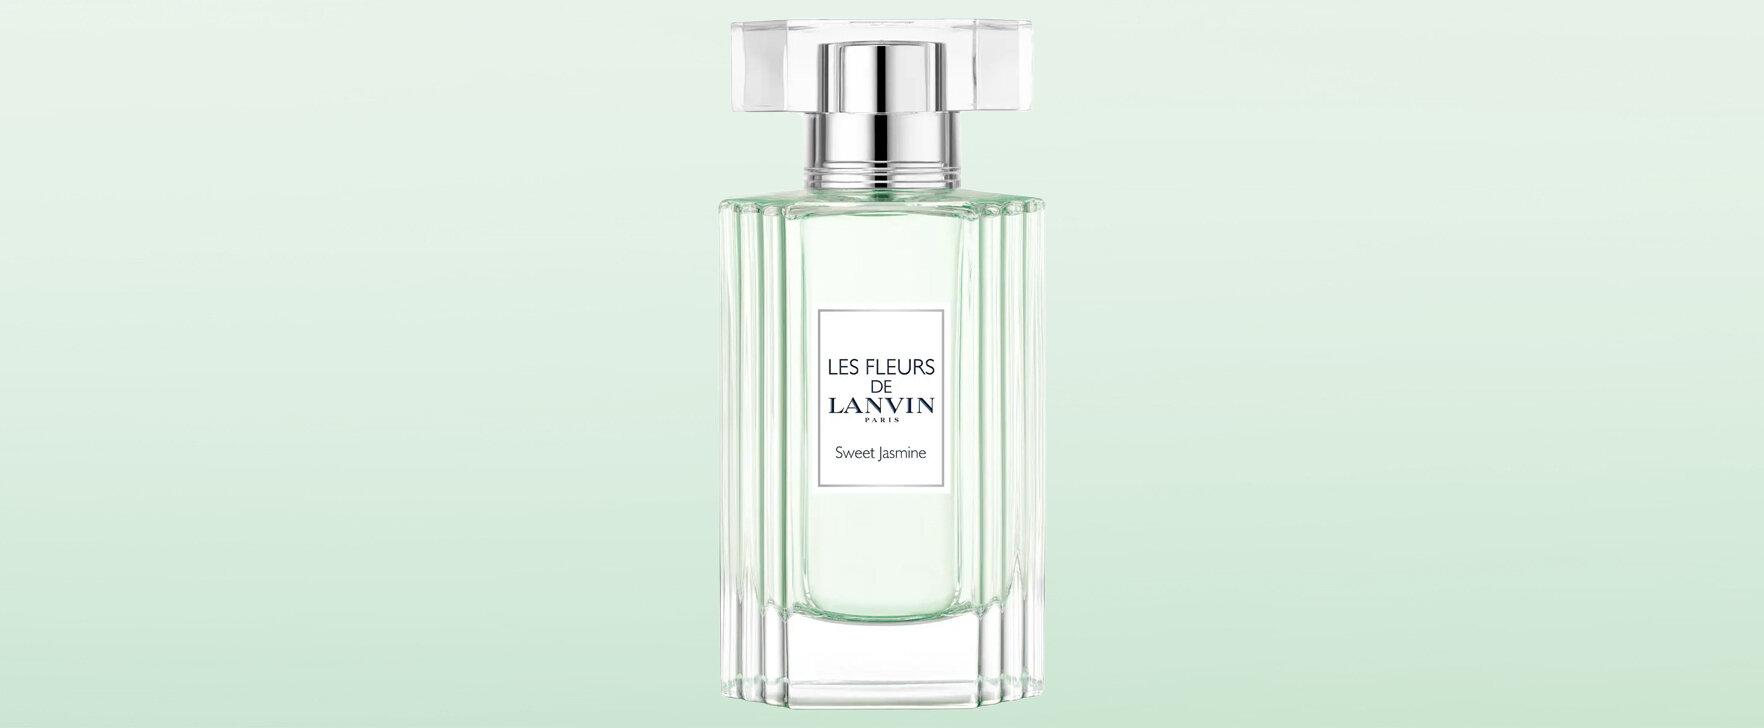 Les Fleurs de Lanvin - Sweet Jasmine: The New Green-floral Fragrance for Women by Lanvin